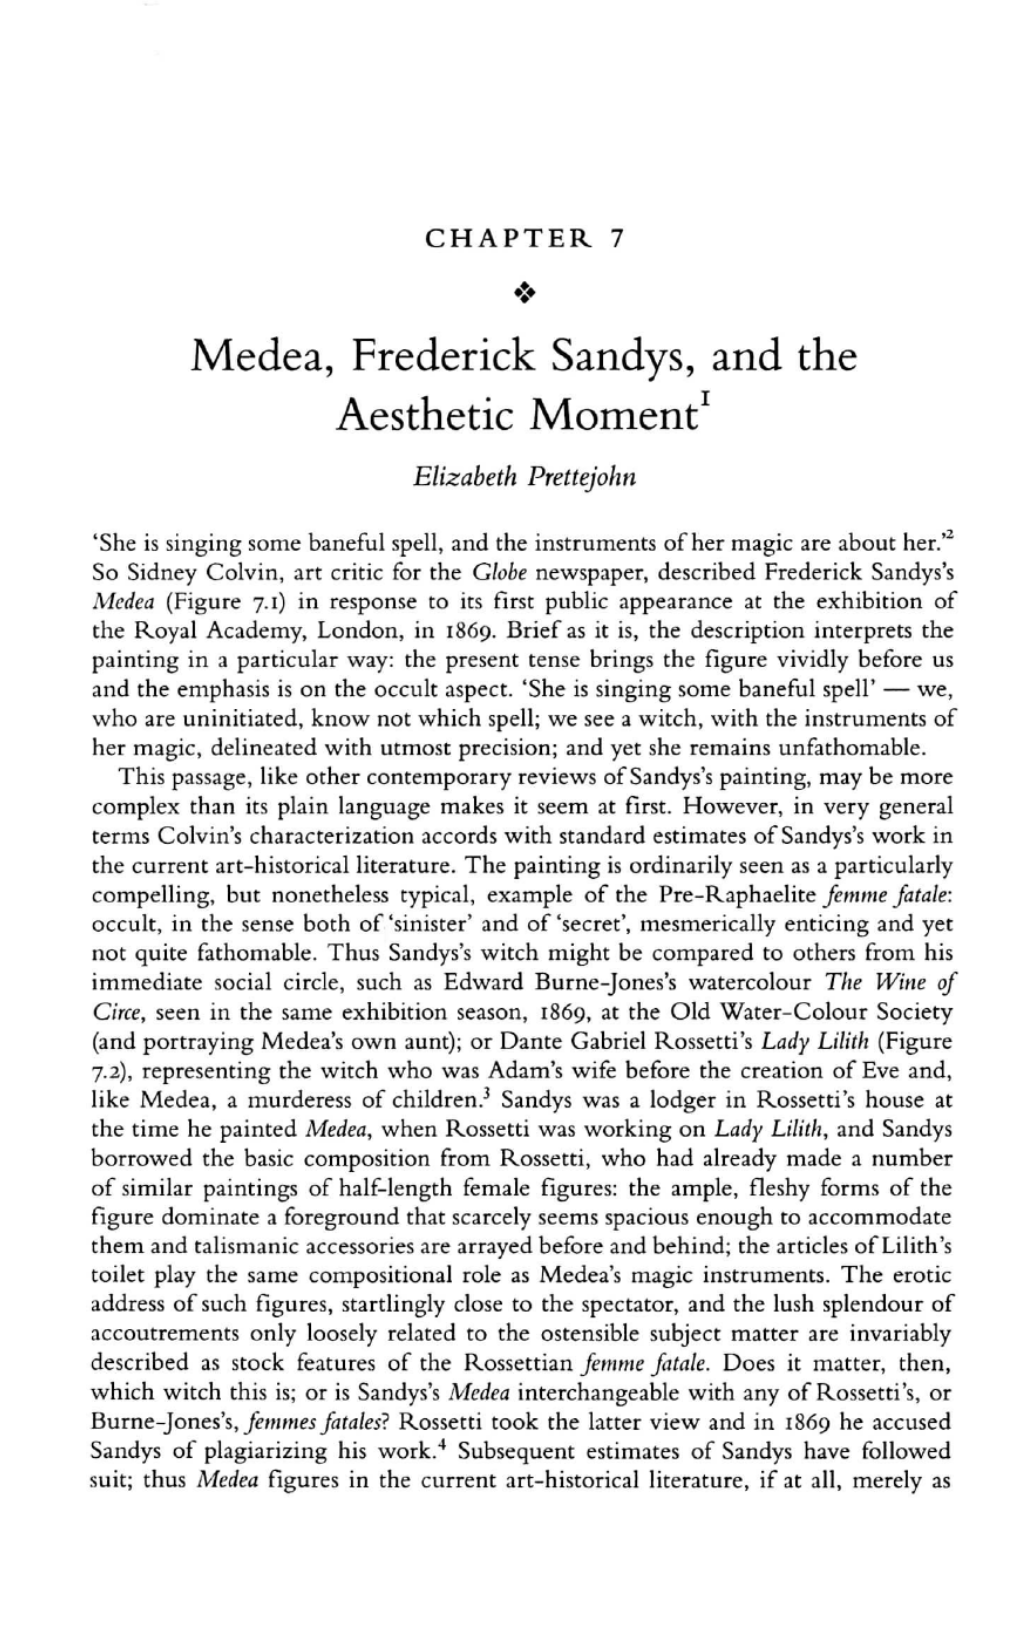 Medea, Frederick Sandys, and the Aesthetic Momene